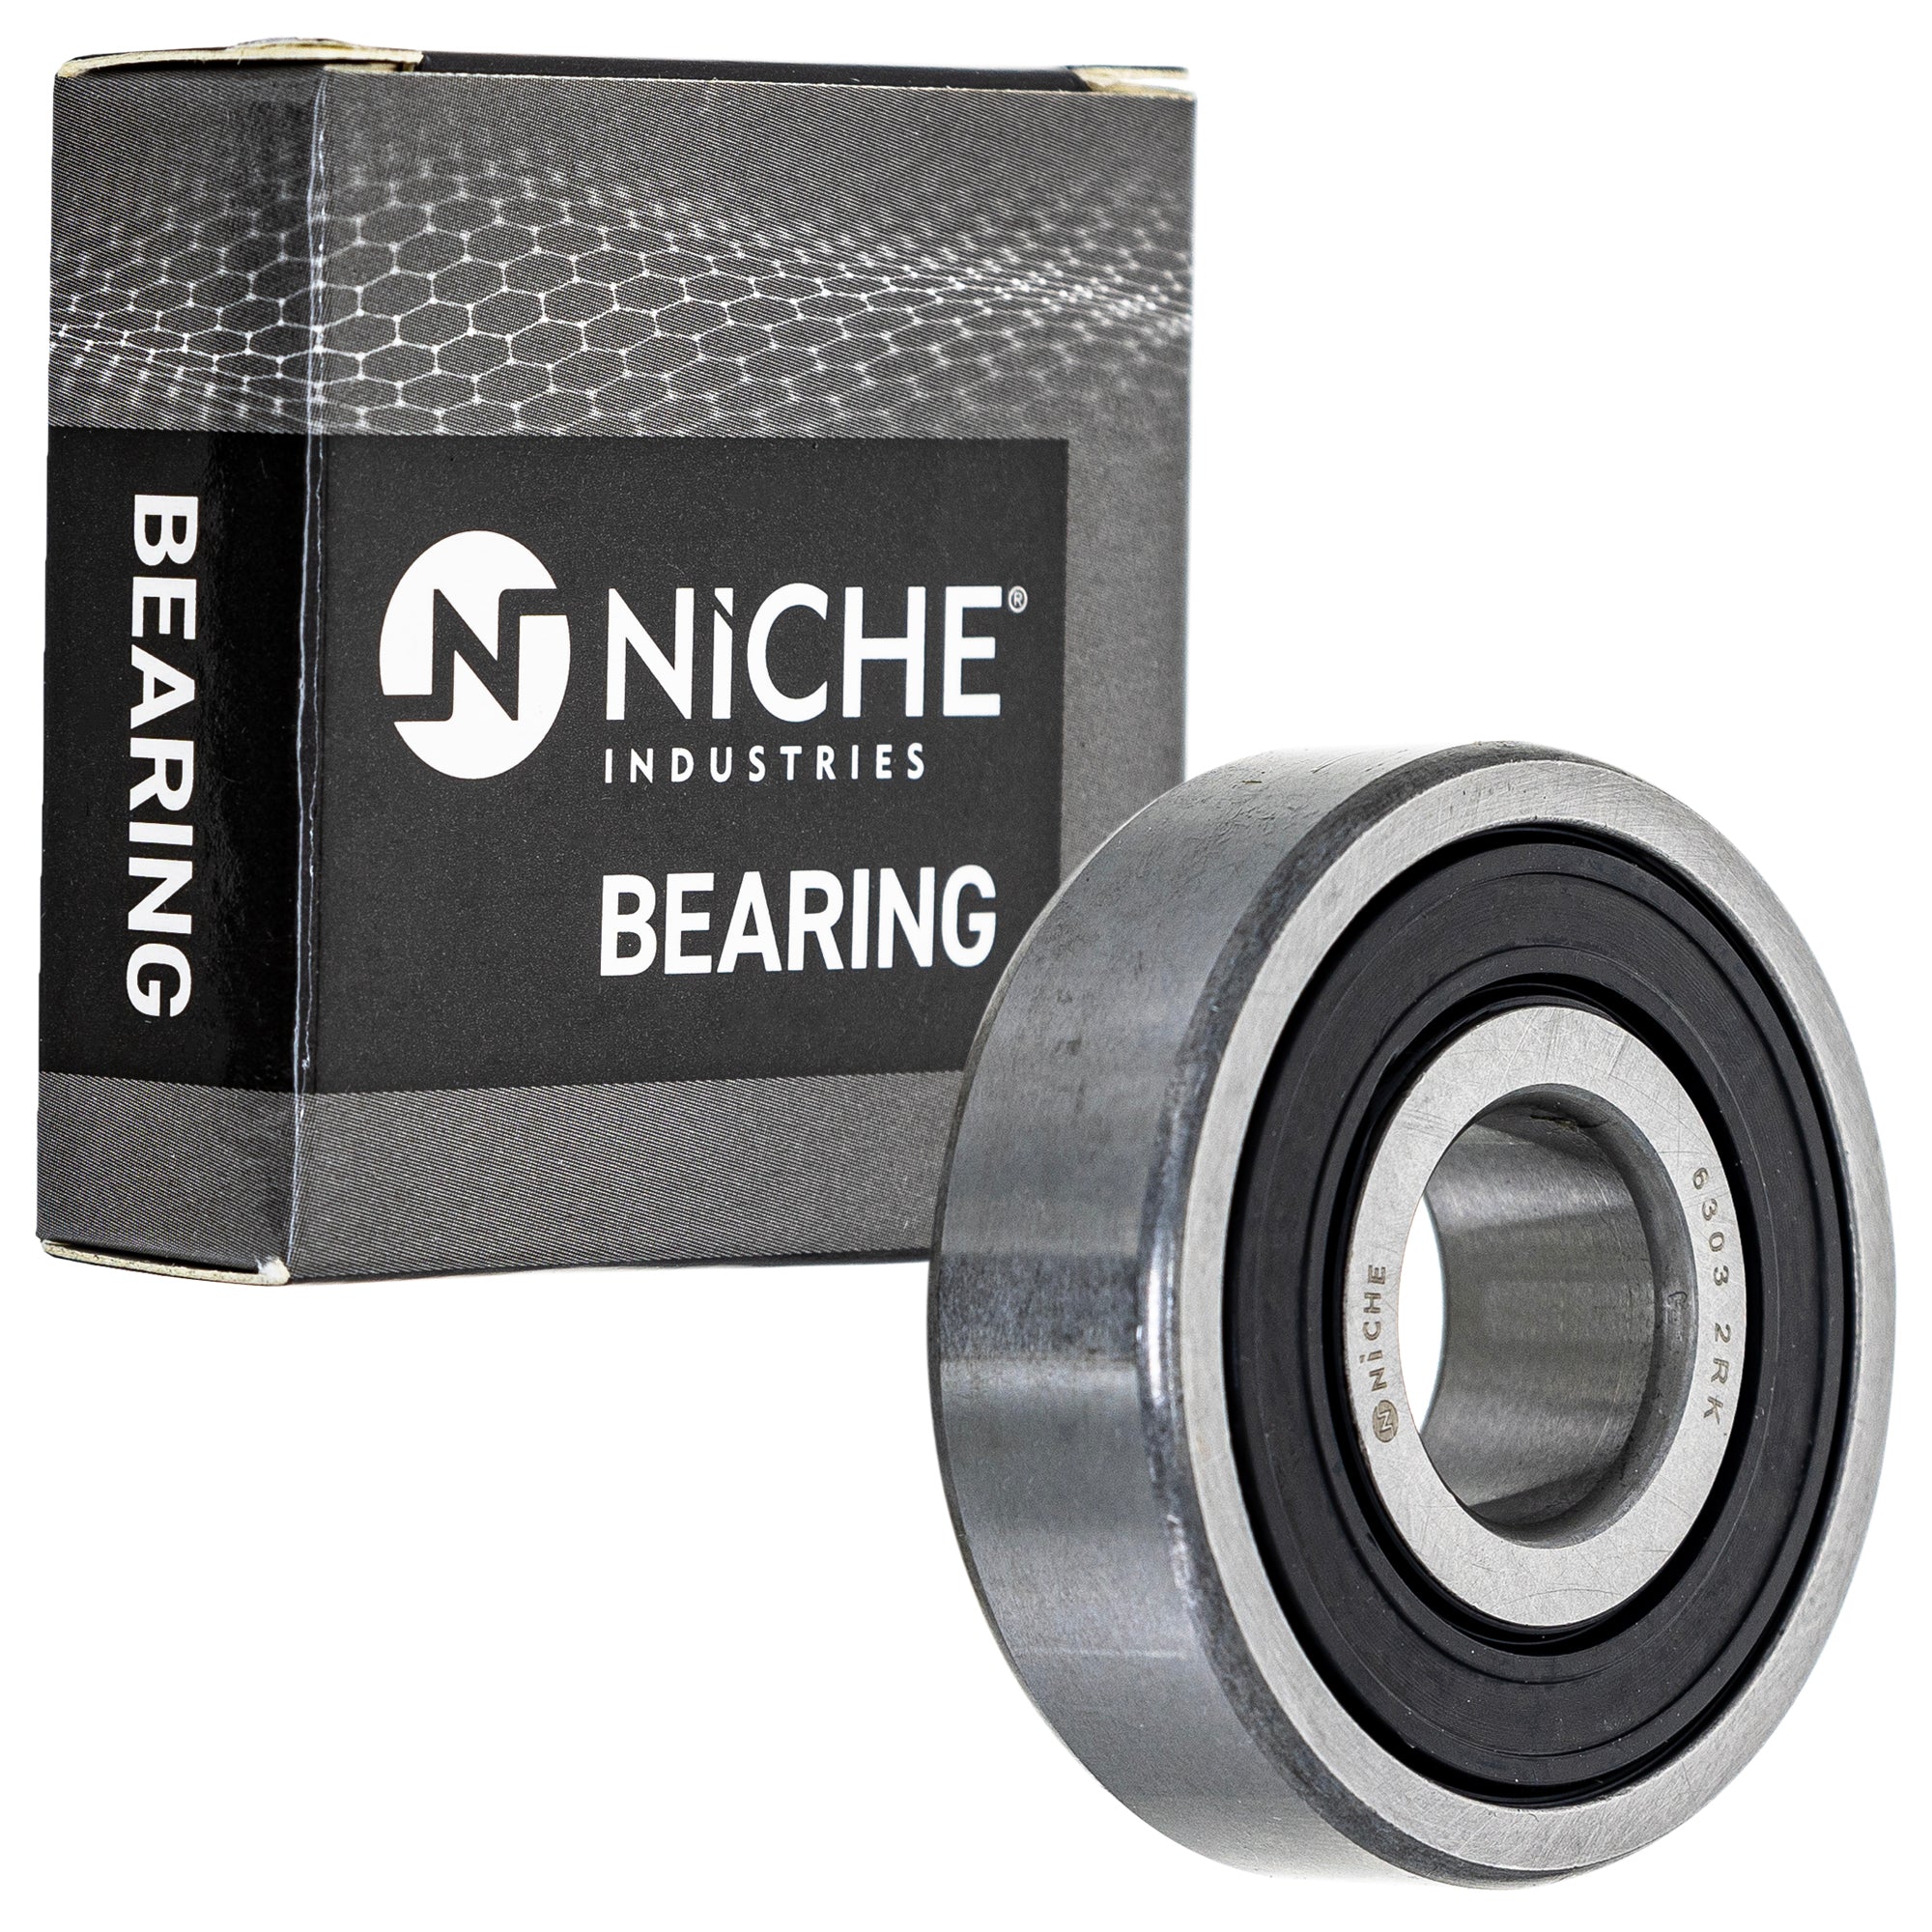 NICHE 519-CBB2328R Bearing 10-Pack for zOTHER XR650L XR400R XR250R